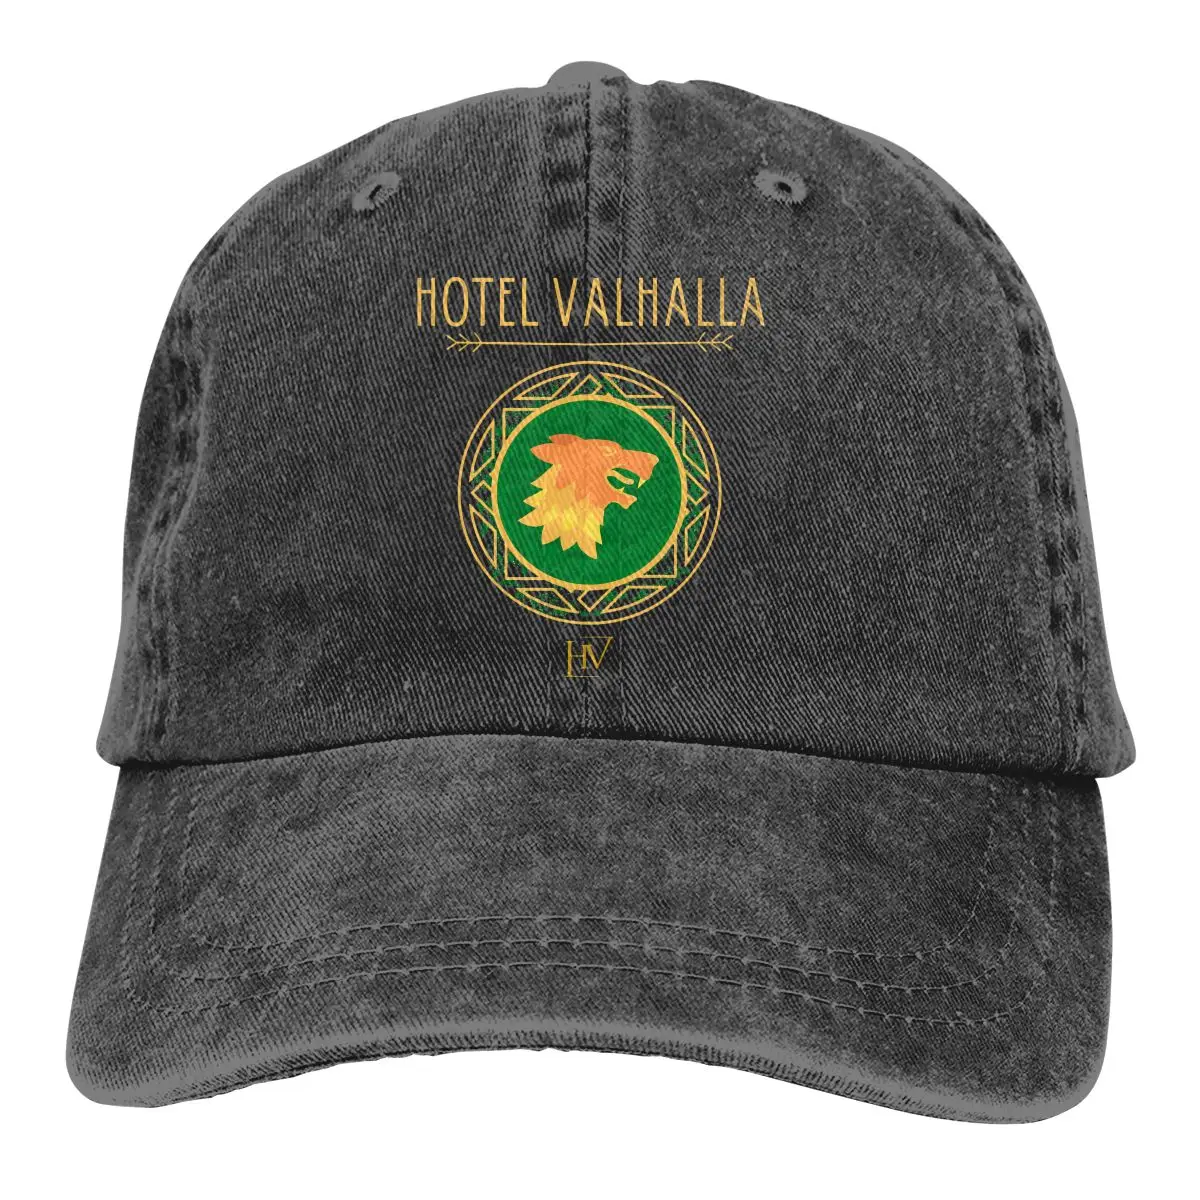 

Hotel Valhalla Standard Baseball Cap Men Vikings Norsemen Ragnar Caps colors Women Summer Snapback Caps